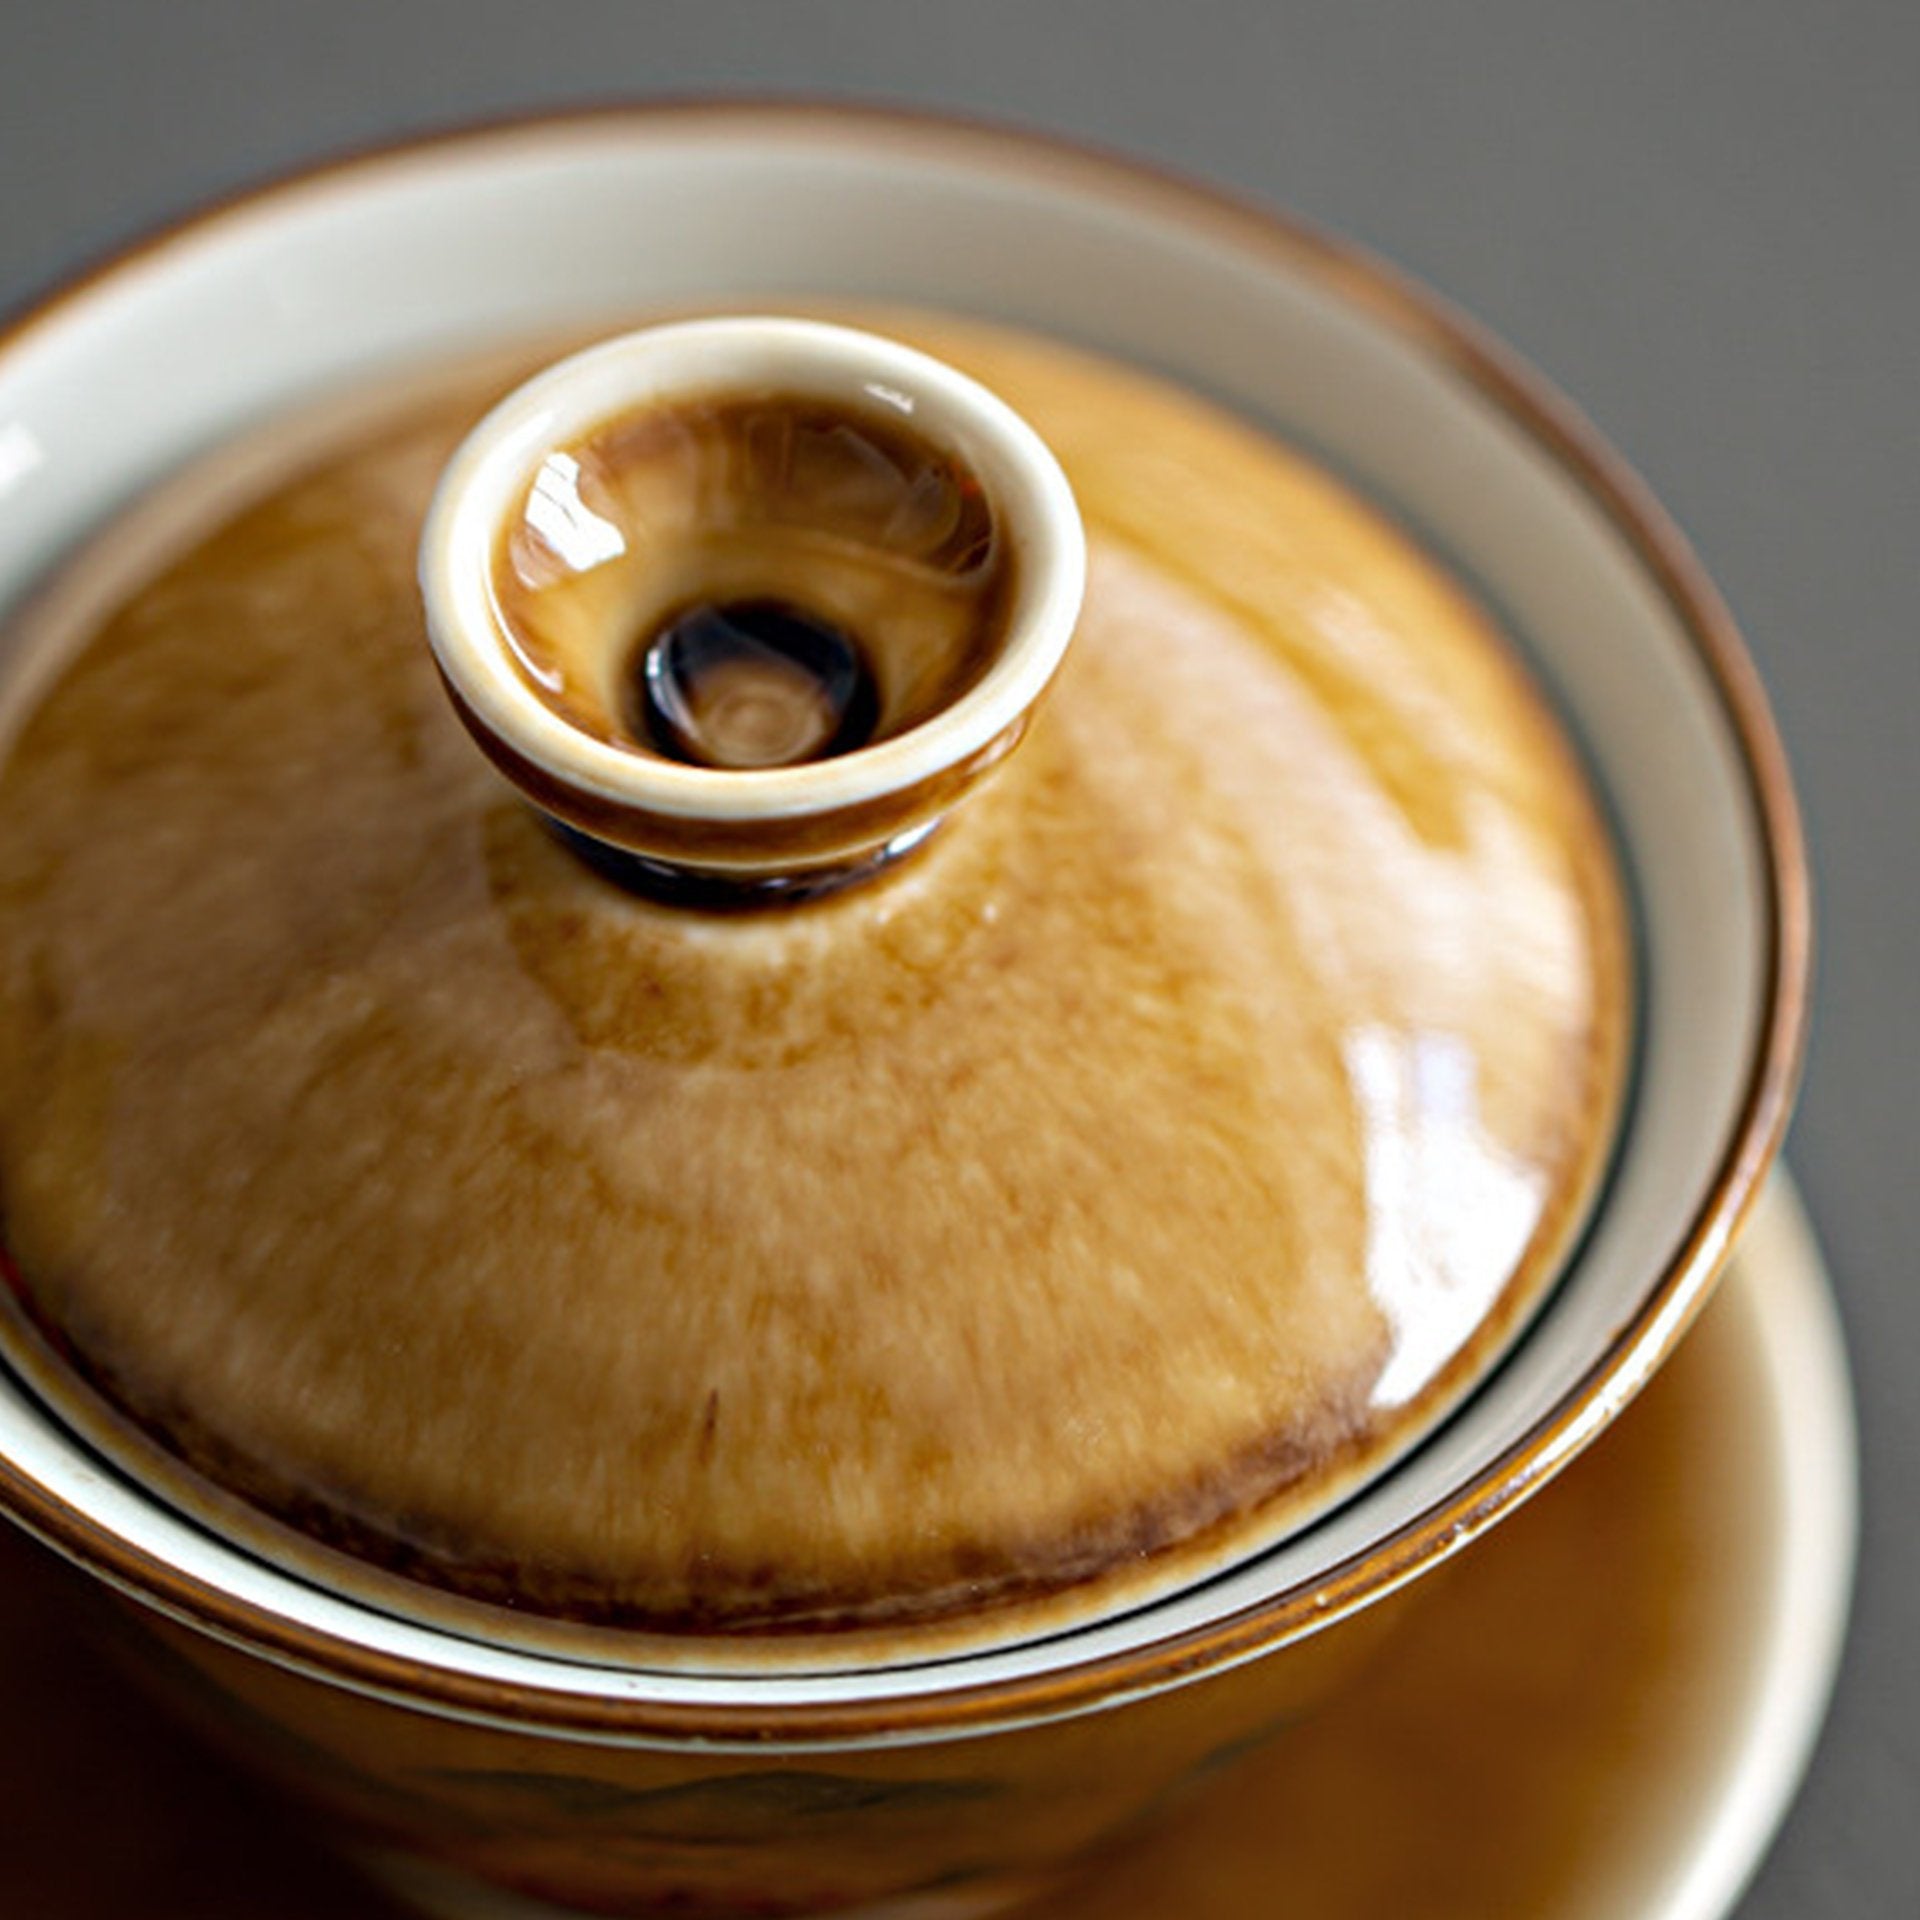 Close-up of a tea bowl lid with a circular handle.